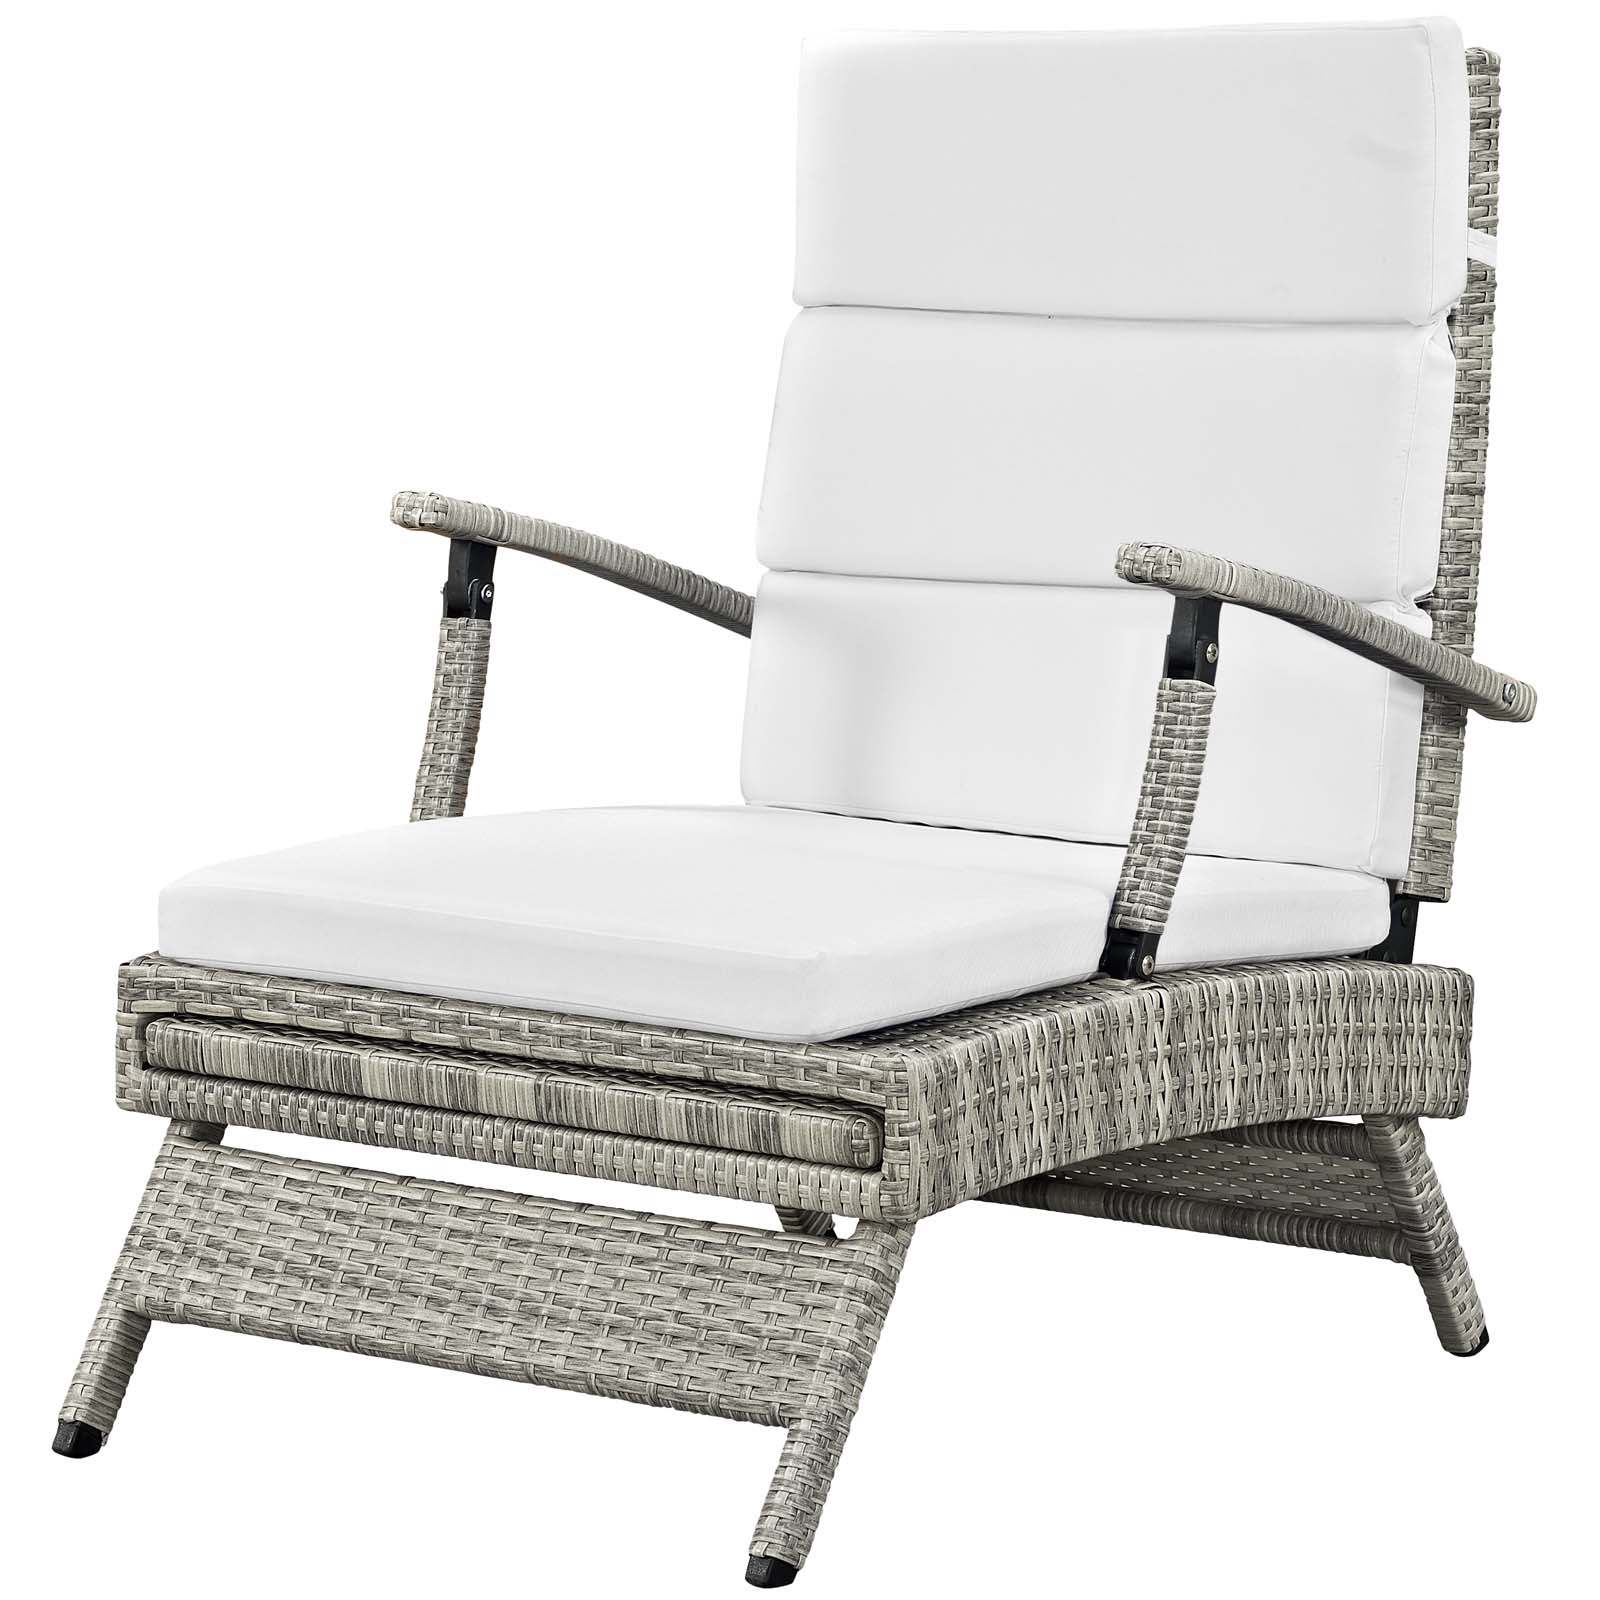 Contemporary Modern Urban Designer Outdoor Patio Balcony Garden Furniture Lounge Chair Chaise, Fabric Rattan Wicker, White - image 1 of 9